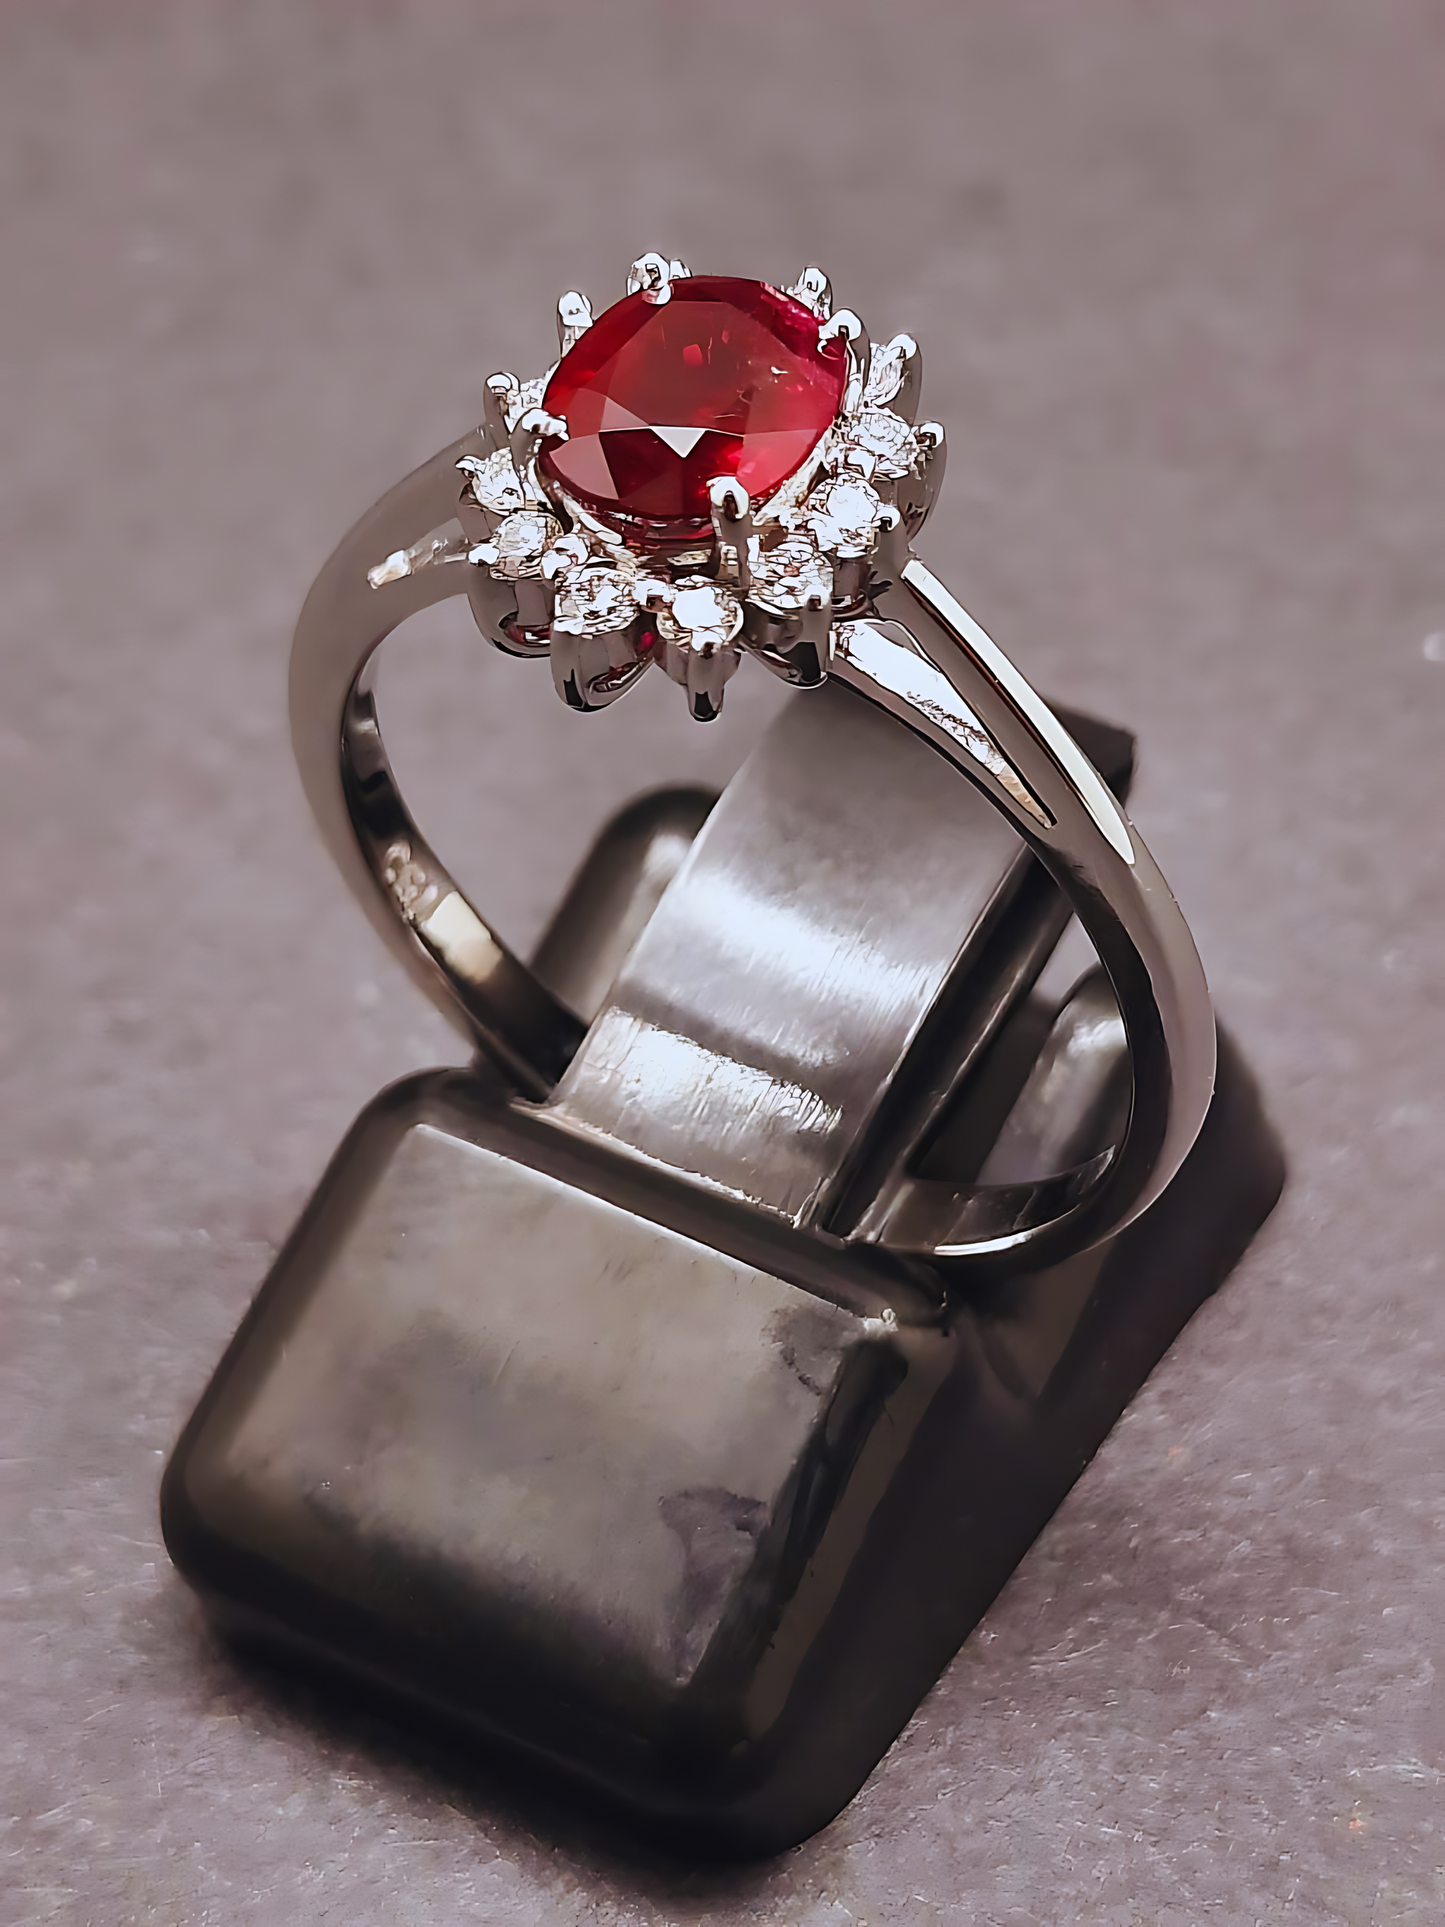 Handmade 18K white gold ring with natural unheated Burmese purplish red Ruby & natural Vvs1 high quality Diamonds ring.